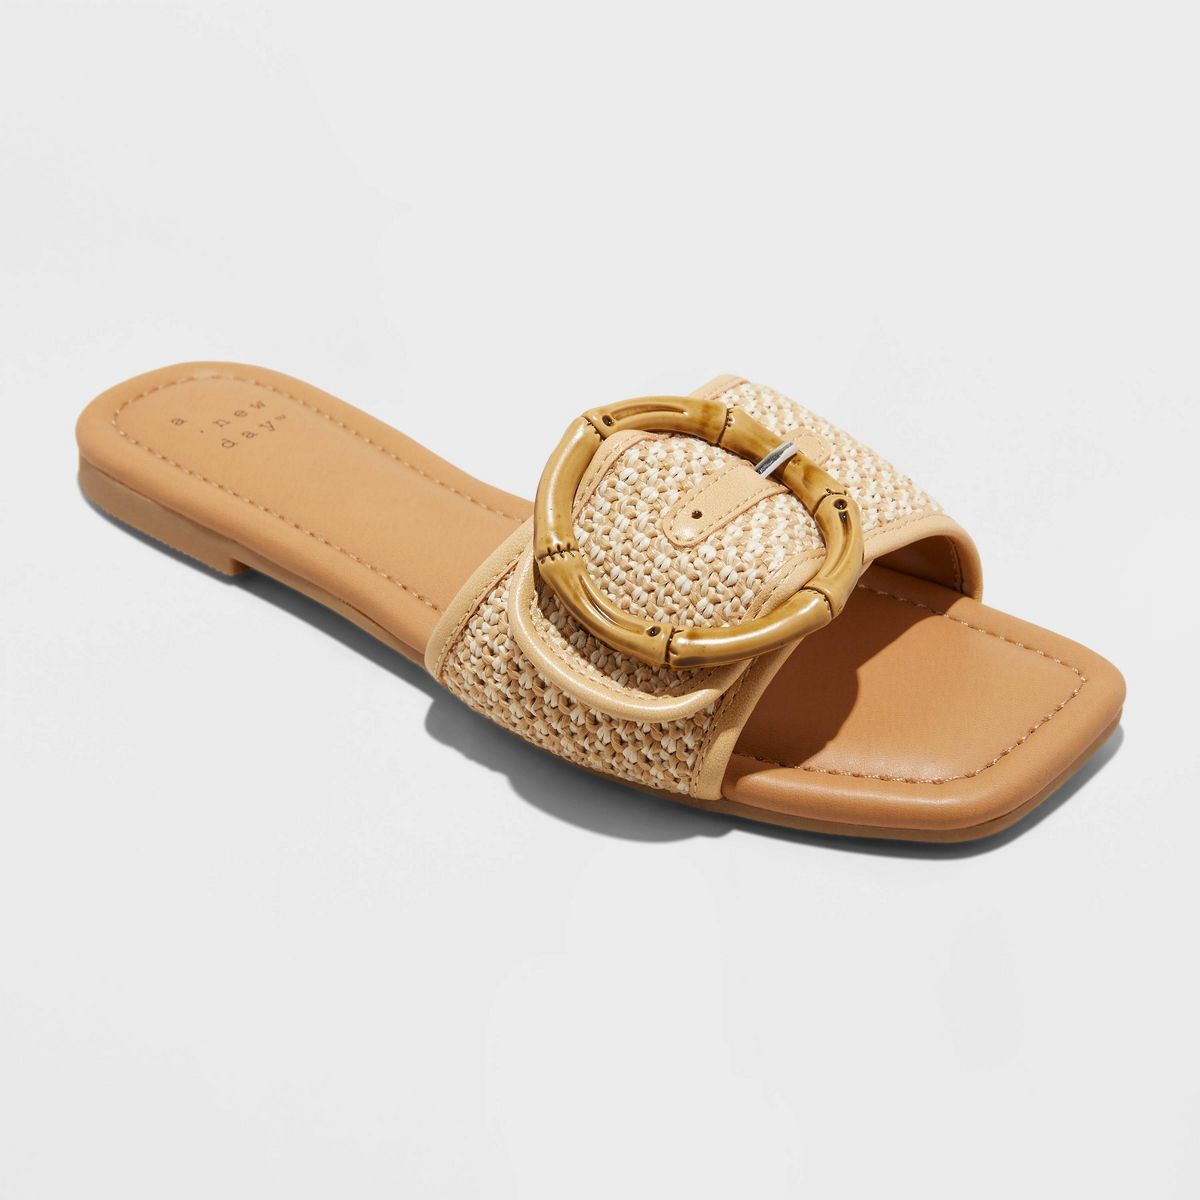 Women's Bennie Buckle Slide Sandals with Memory Foam Insole - A New Day™ Beige 6.5 | Target